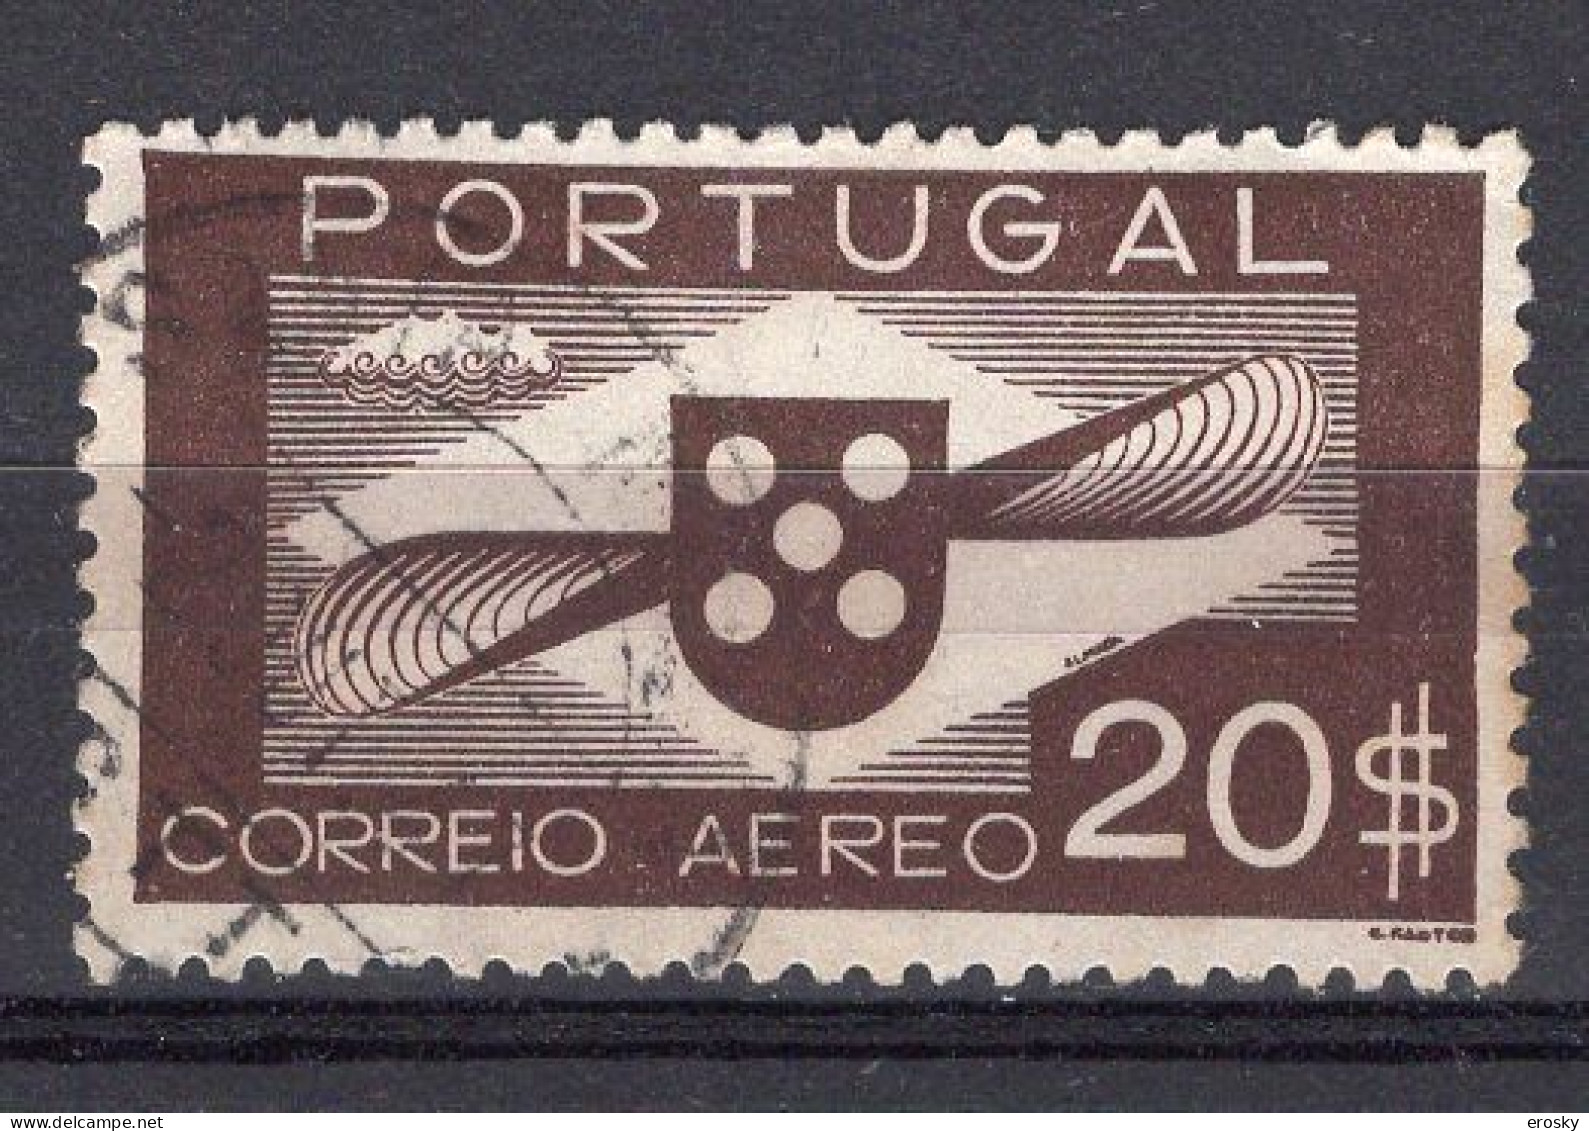 R5155 - PORTUGAL AERIENNE Yv N°9 - Oblitérés